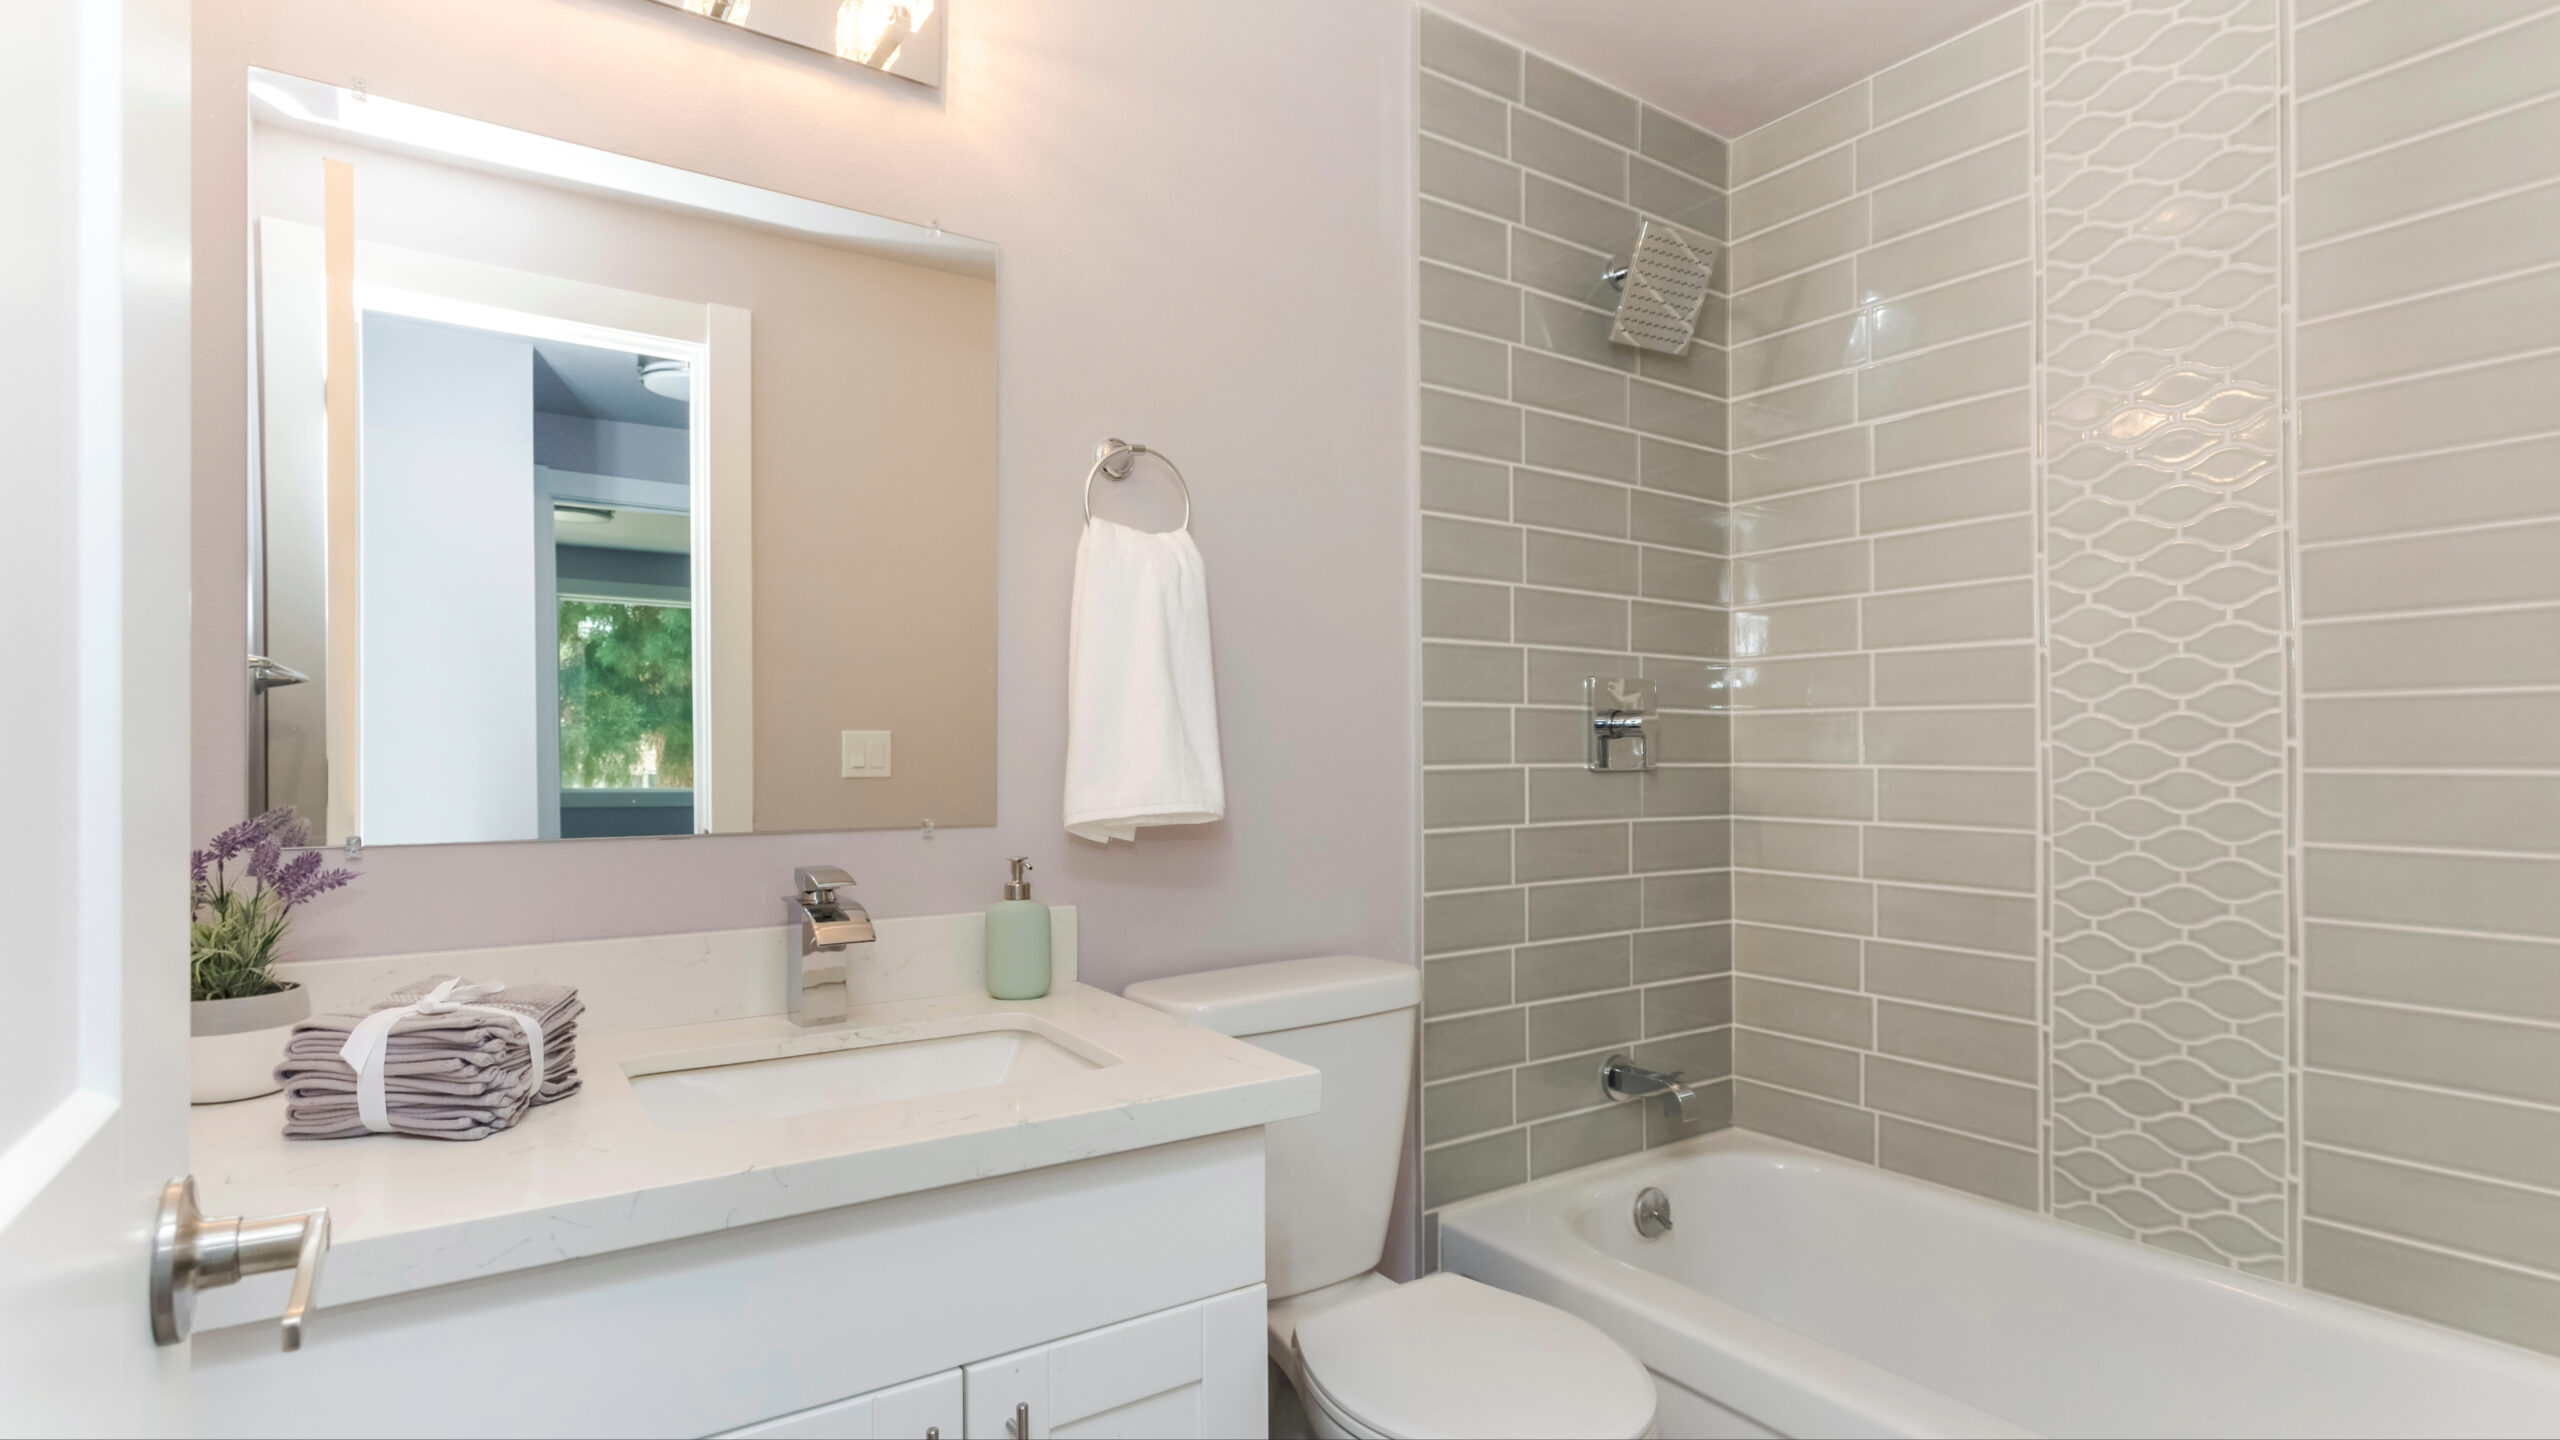 A bathroom with a white bathtub and gray tile